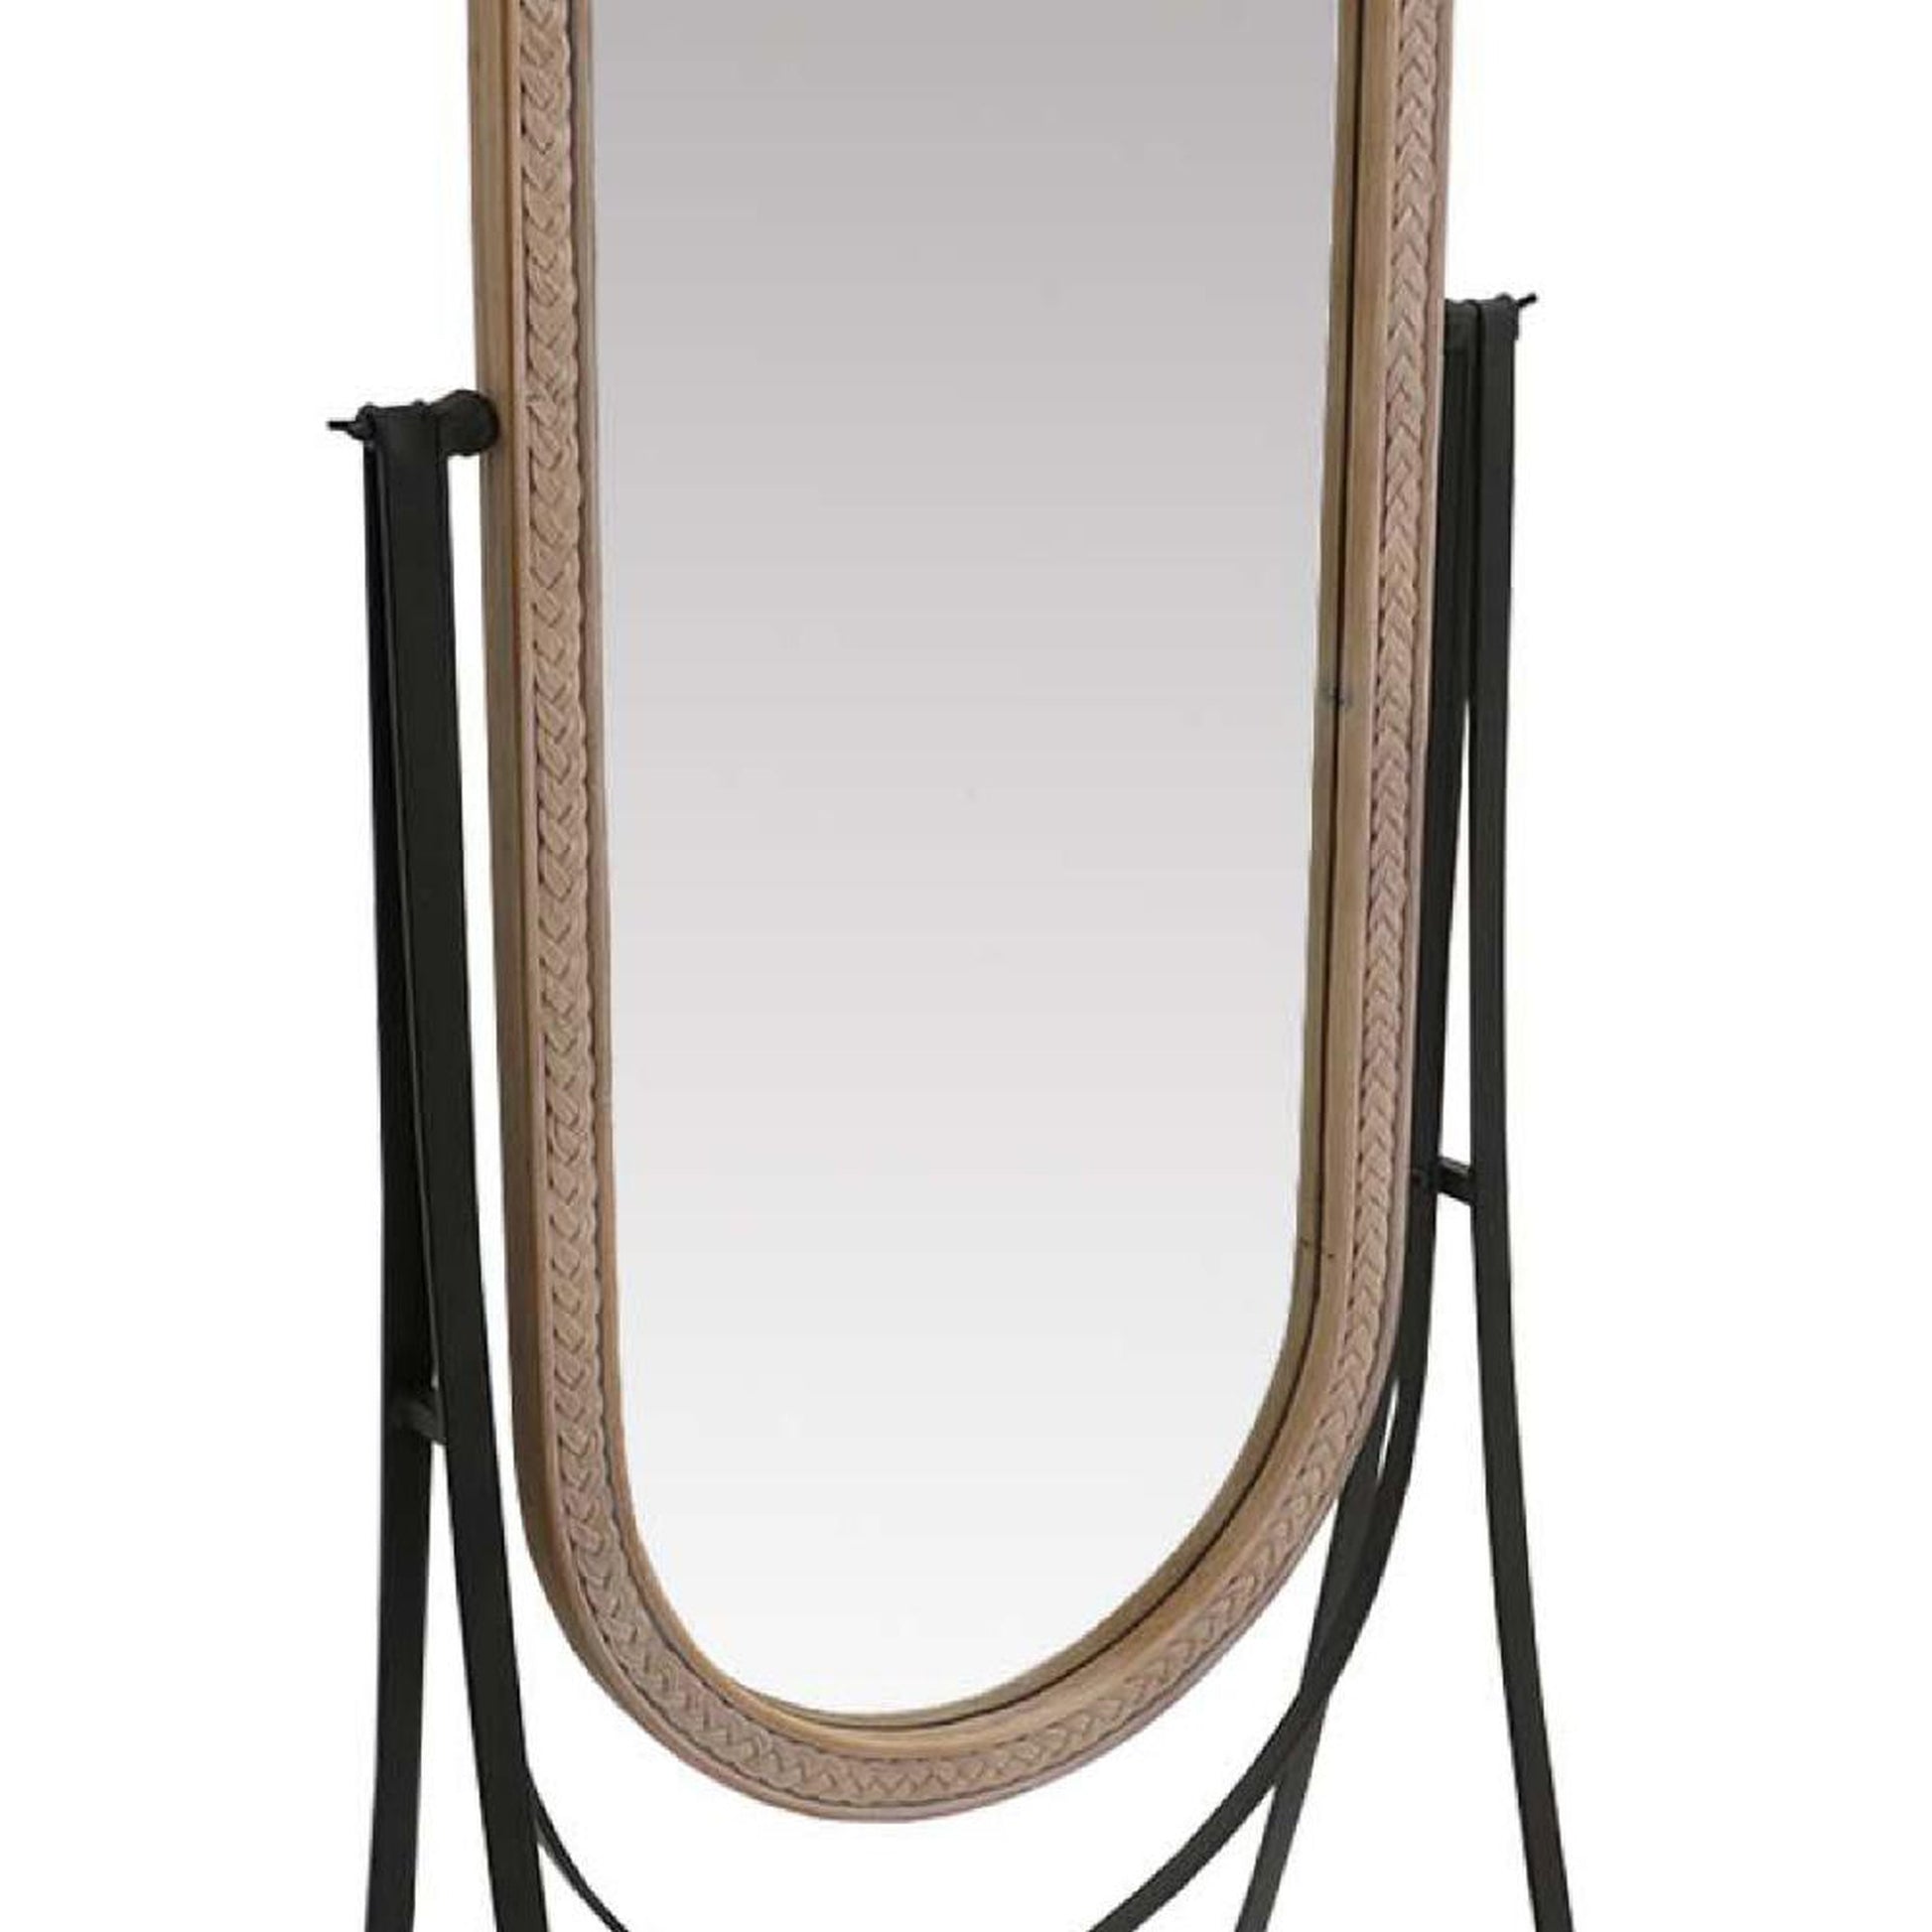 Benzara 64" Brown Oval Carved Wood Frame Adjustable Floor Mirror With Metal Stand